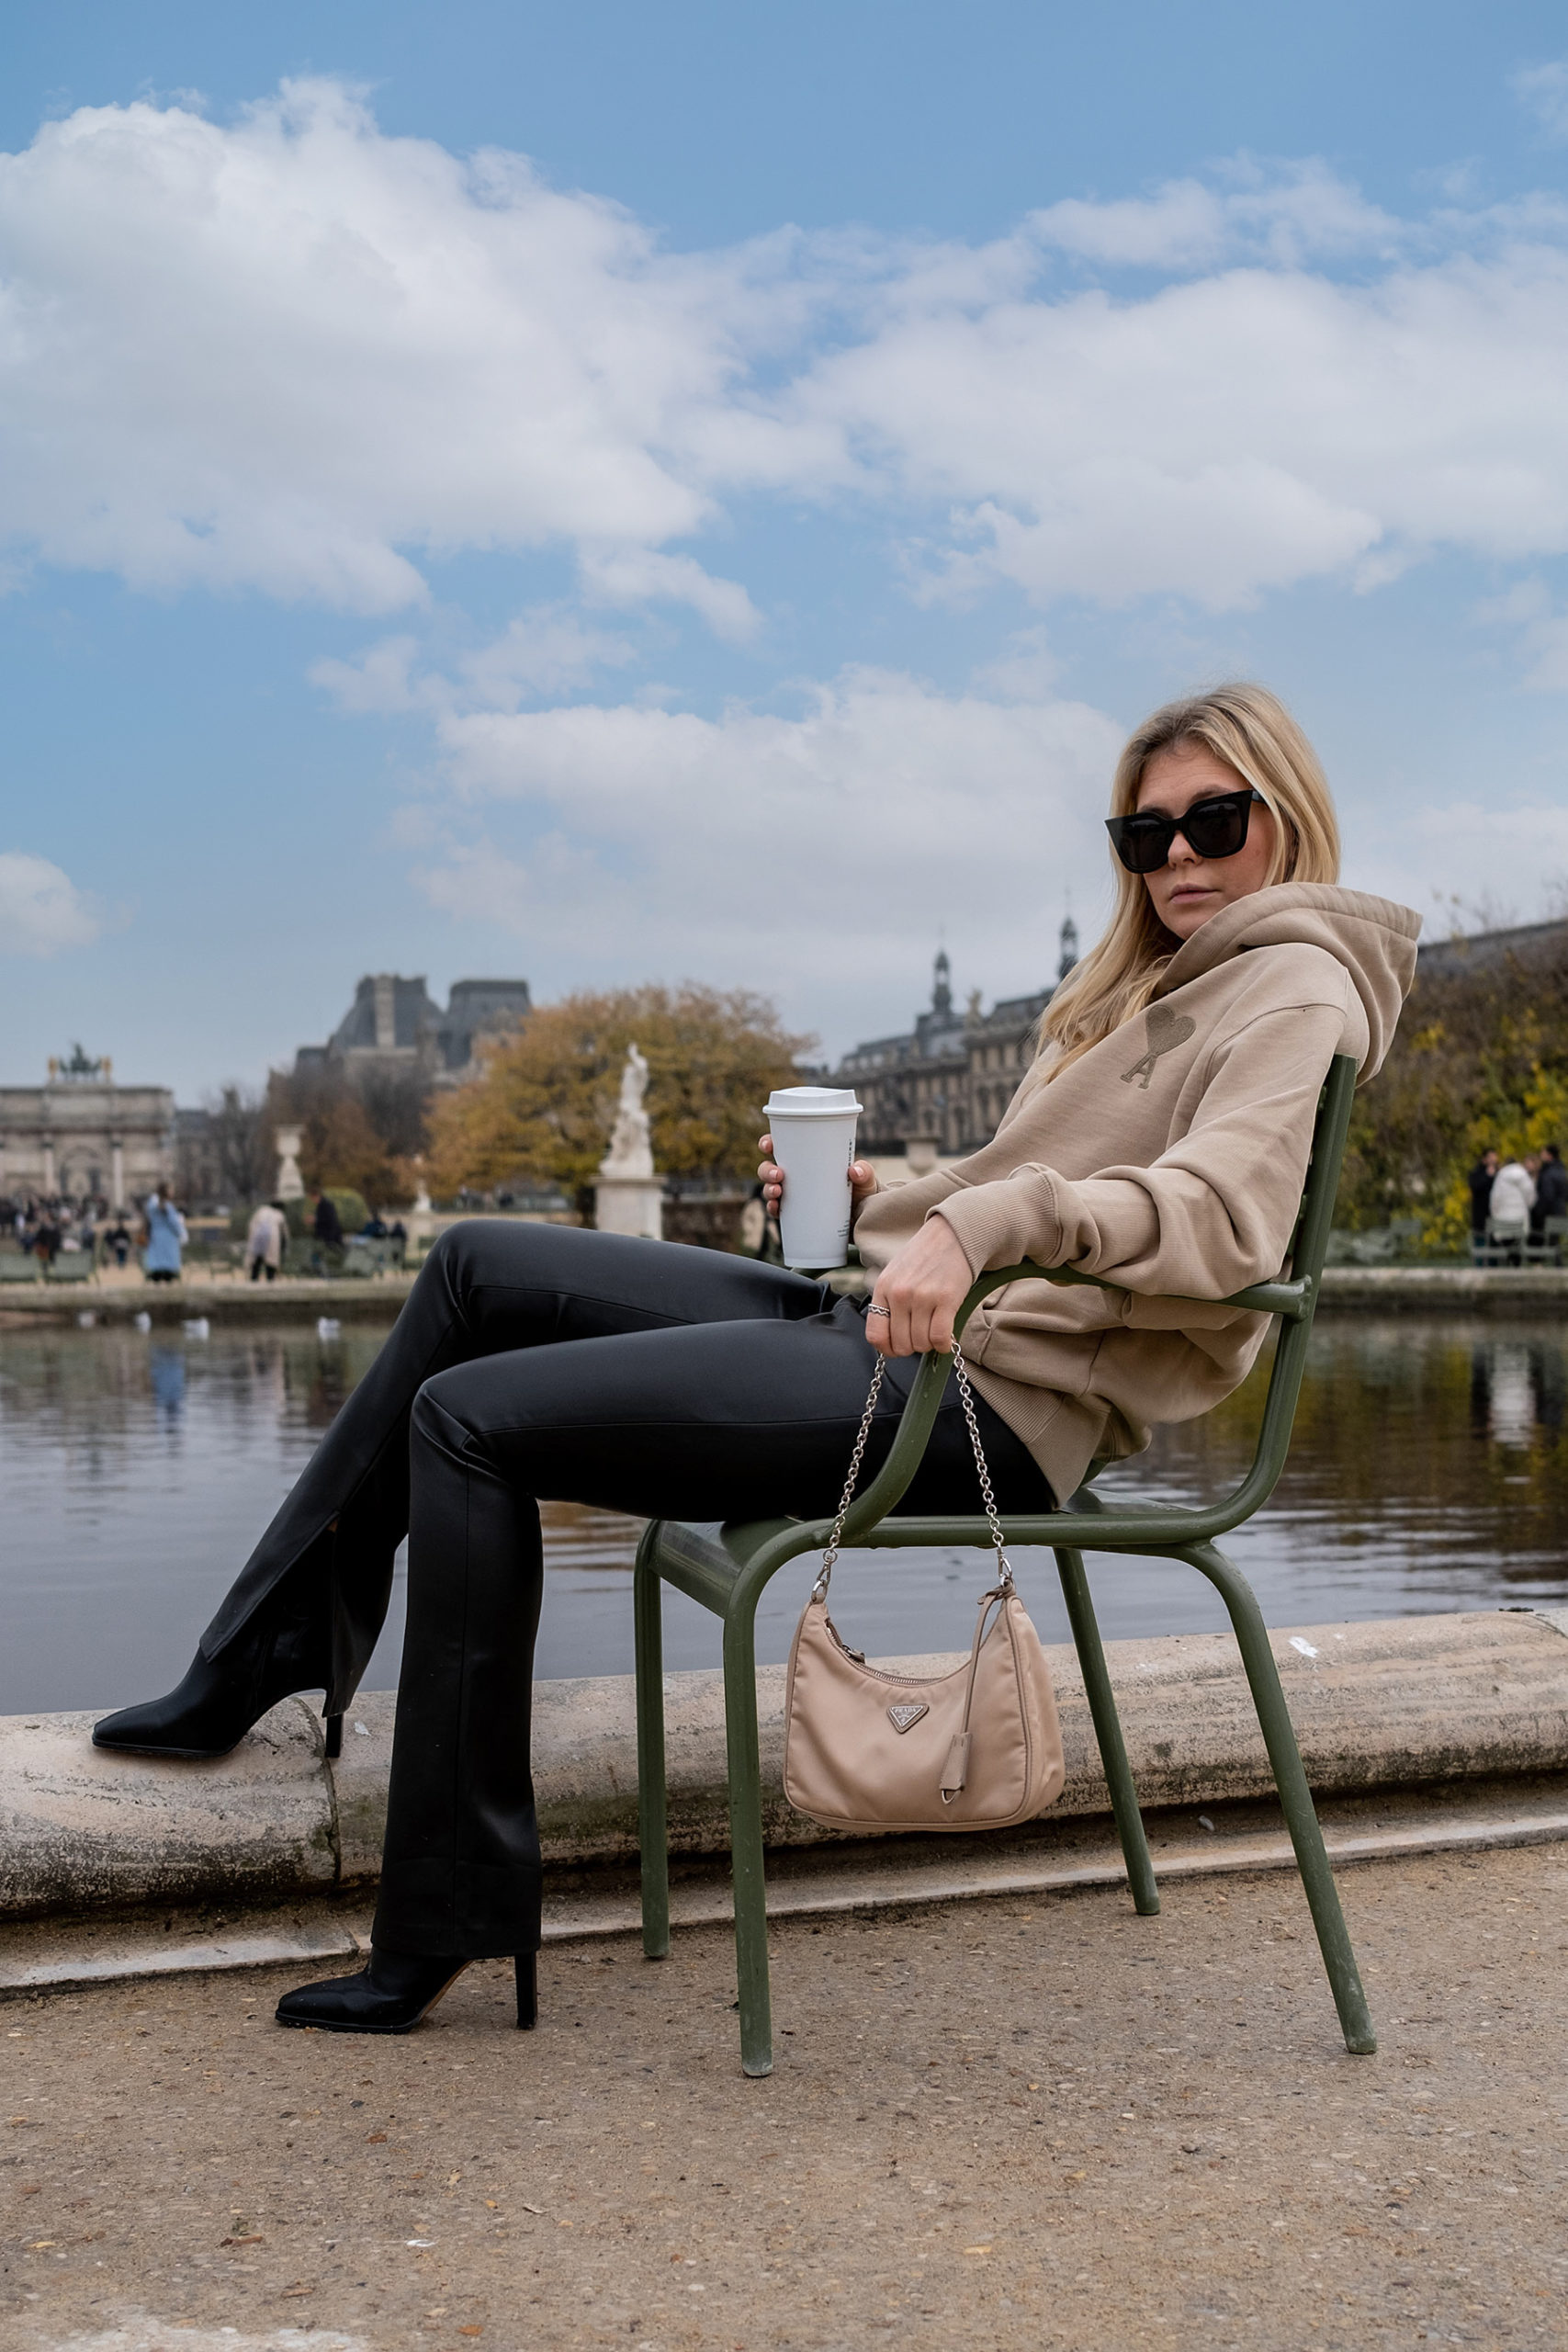 jardin du tuileries instagram fotospots in paris travel blog sunnyinga